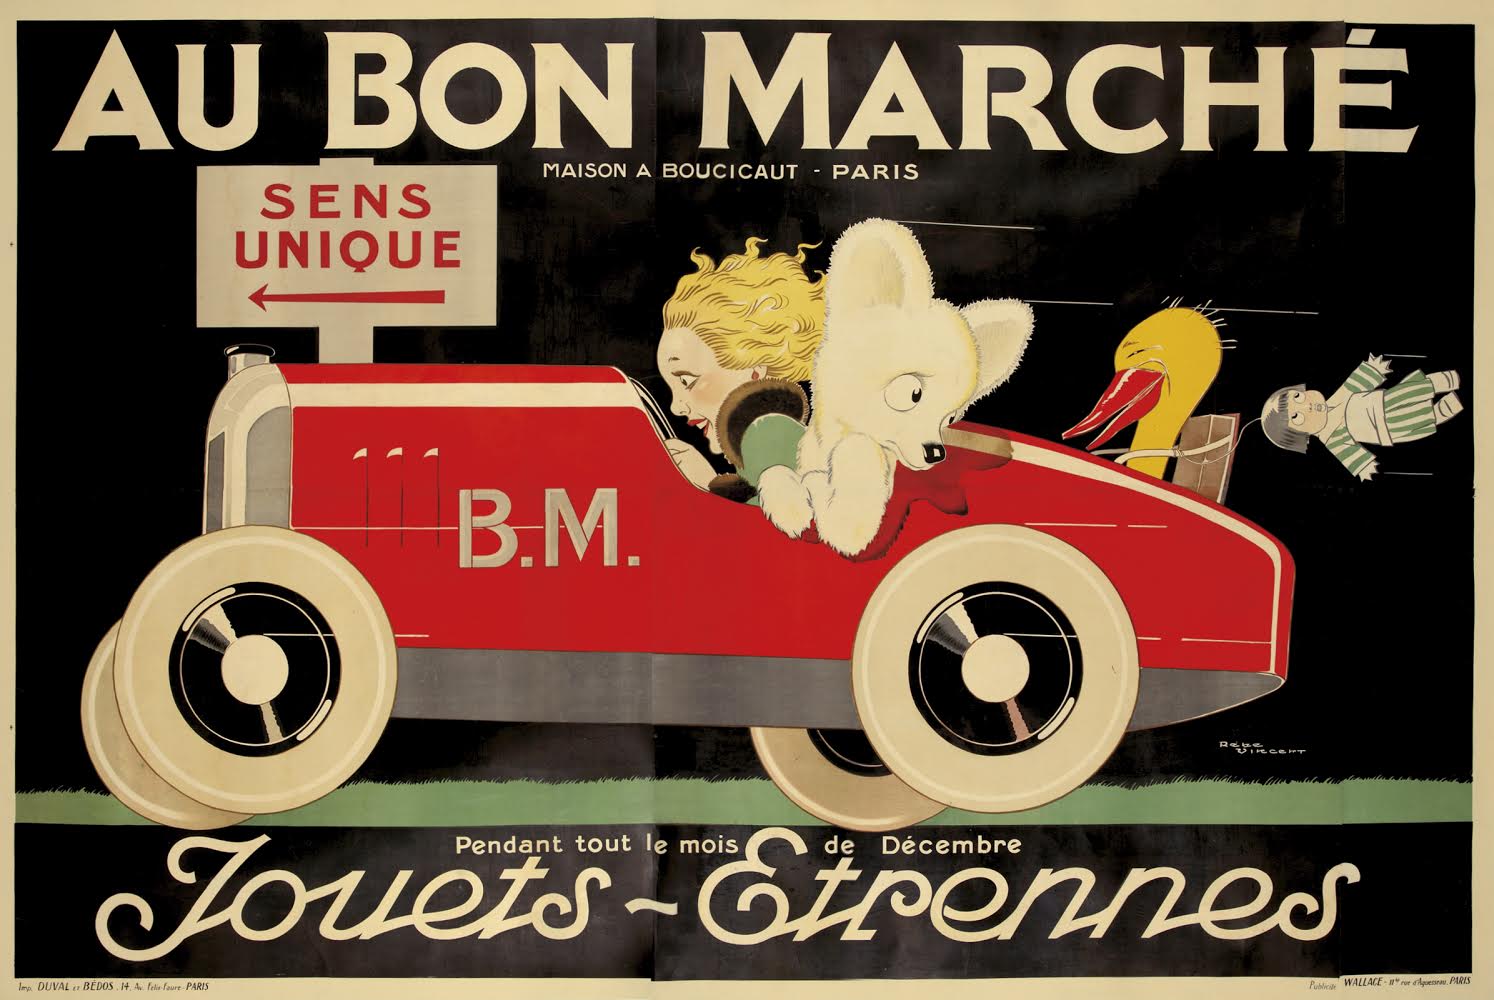 Tony’s Choice: Au Bon Marche Billboard Poster